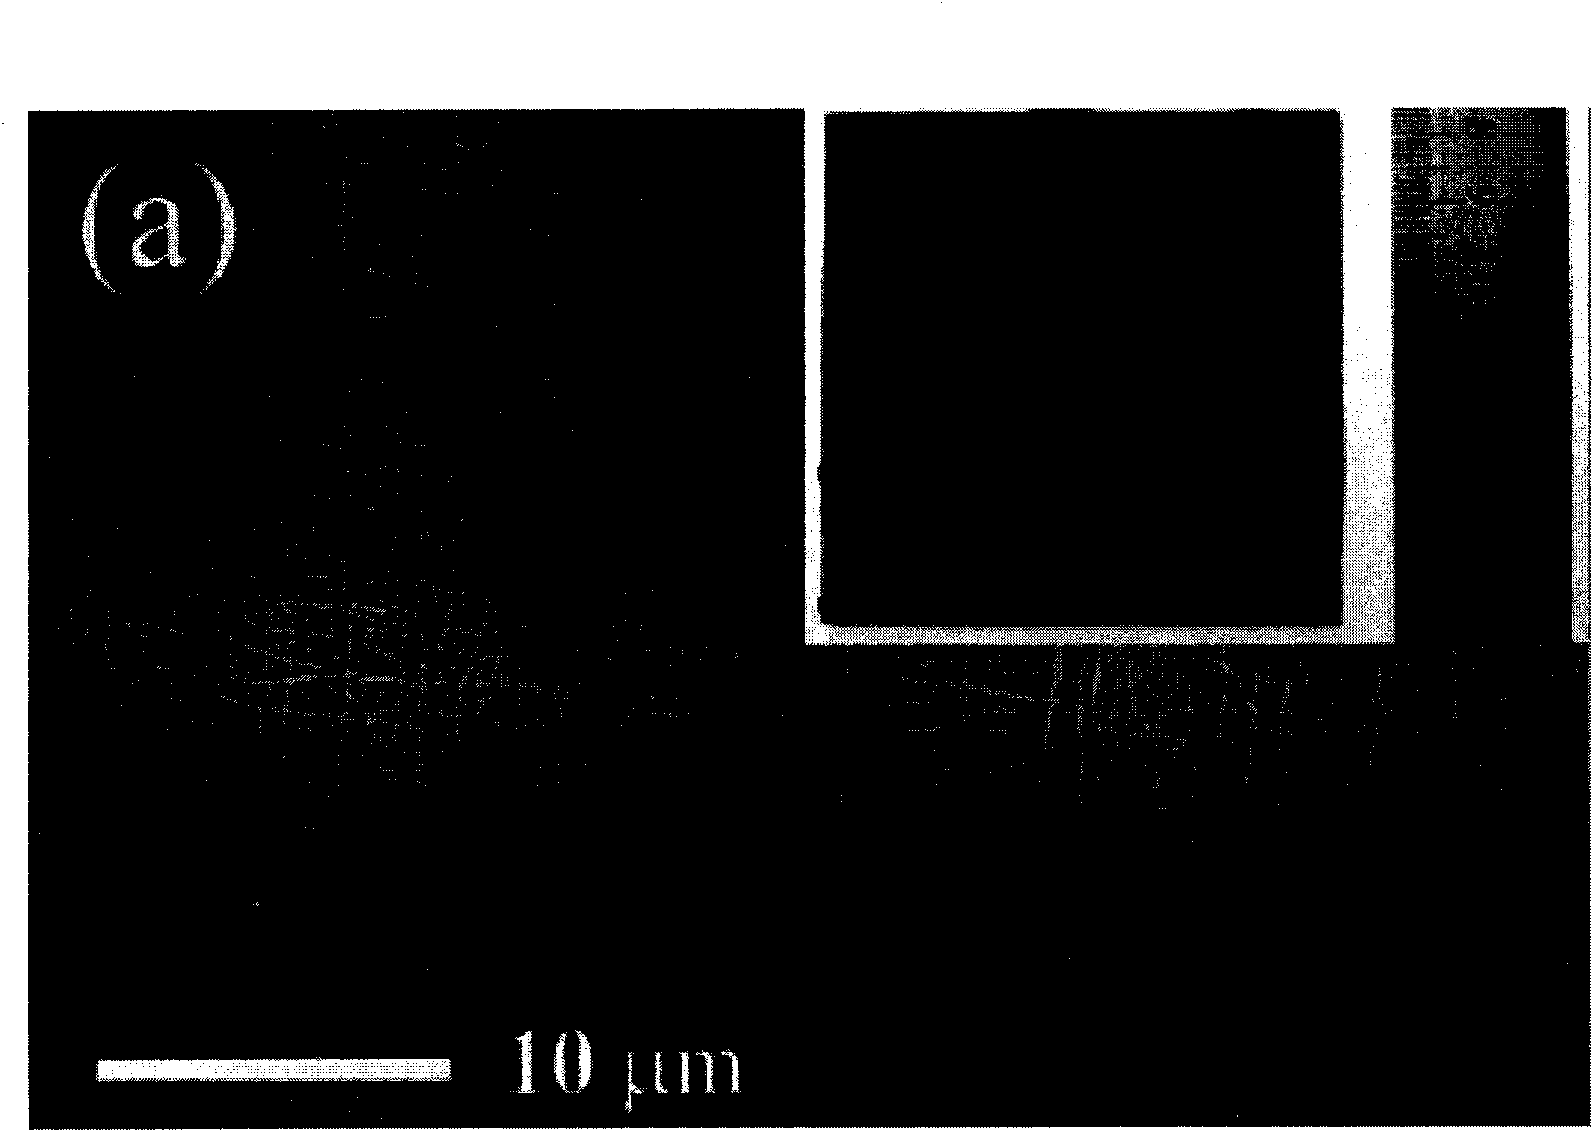 Carbon nano tube Poisson ratio material